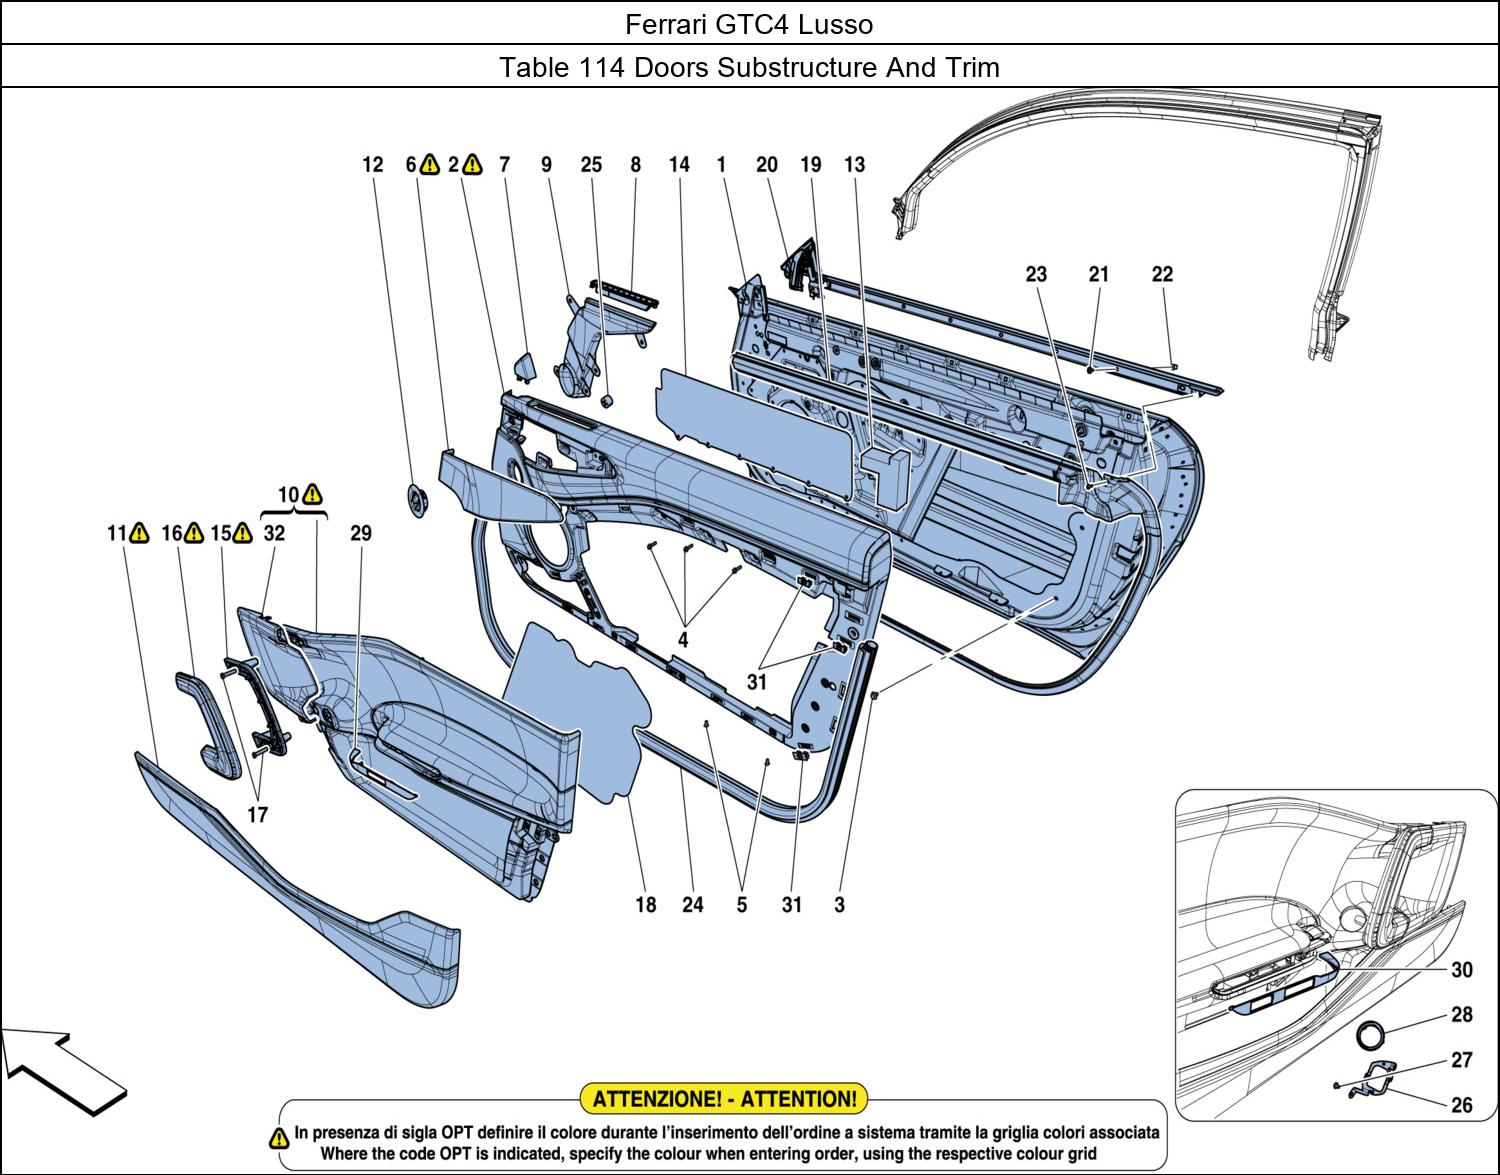 Ferrari Parts Ferrari GTC4 Lusso Table 114 Doors Substructure And Trim